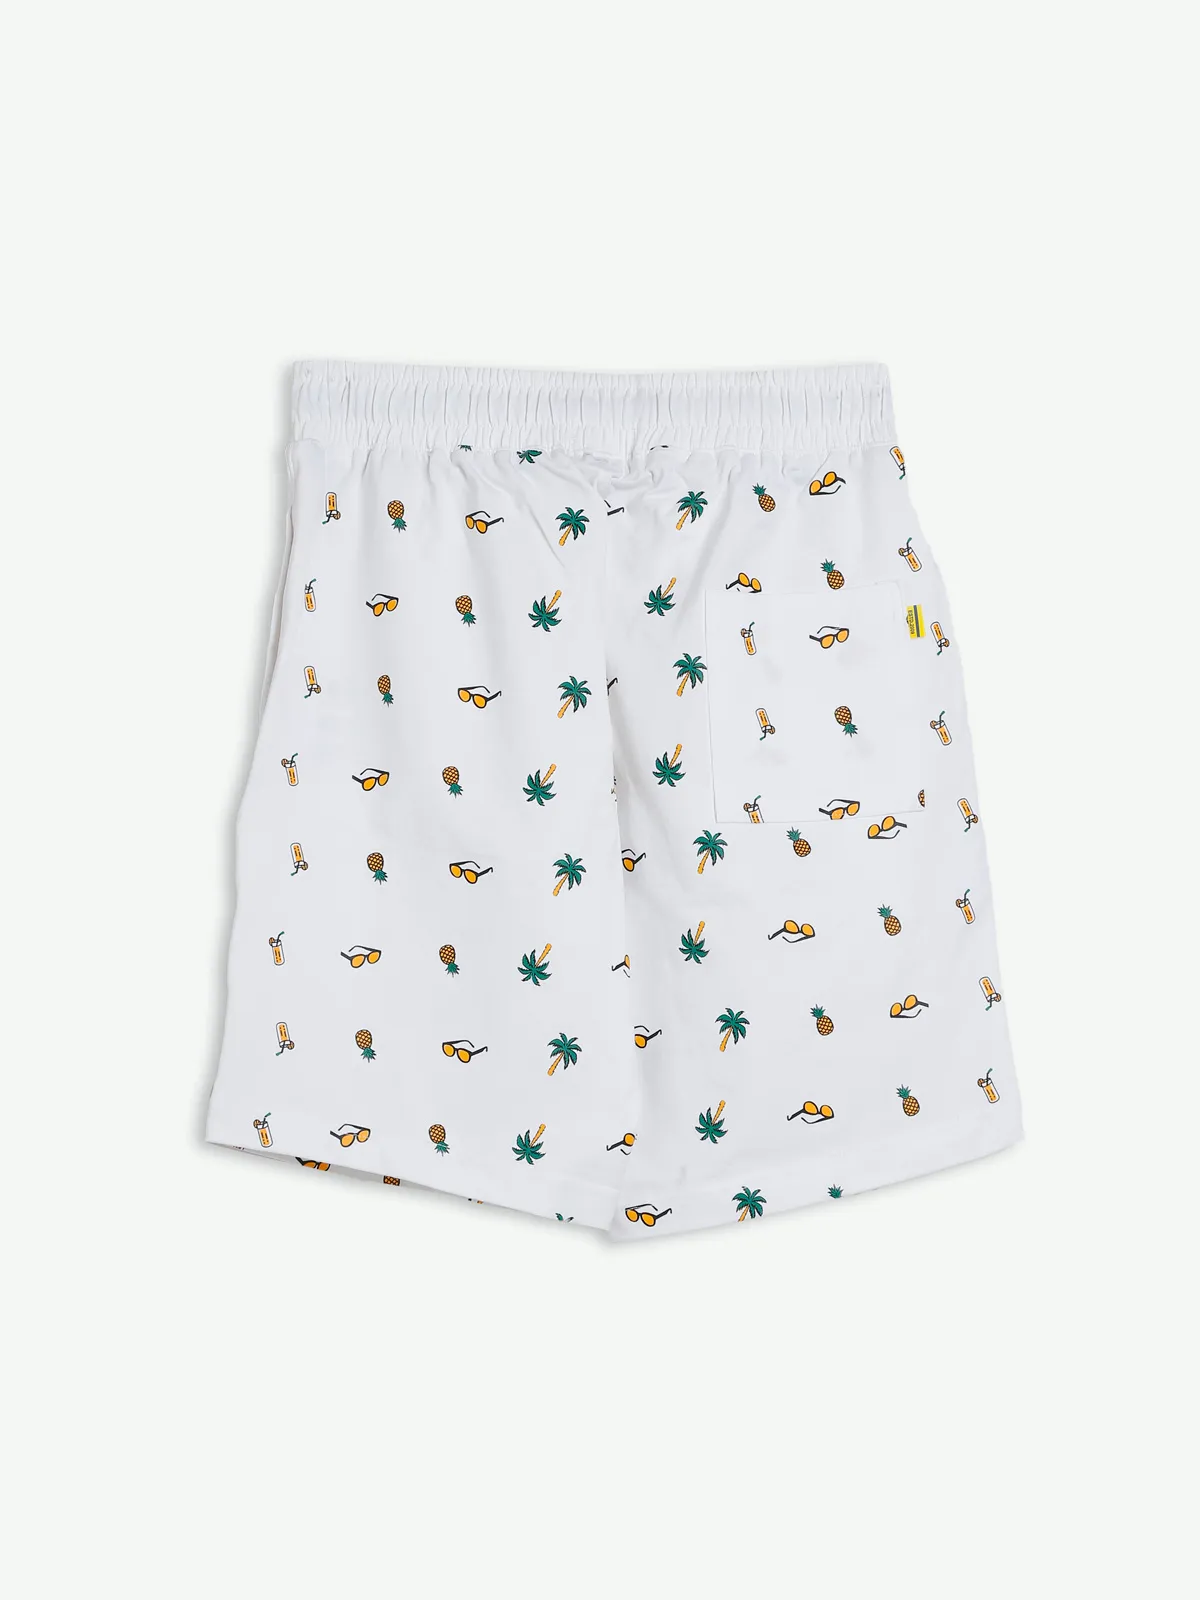 XN Replay printed white cotton shorts